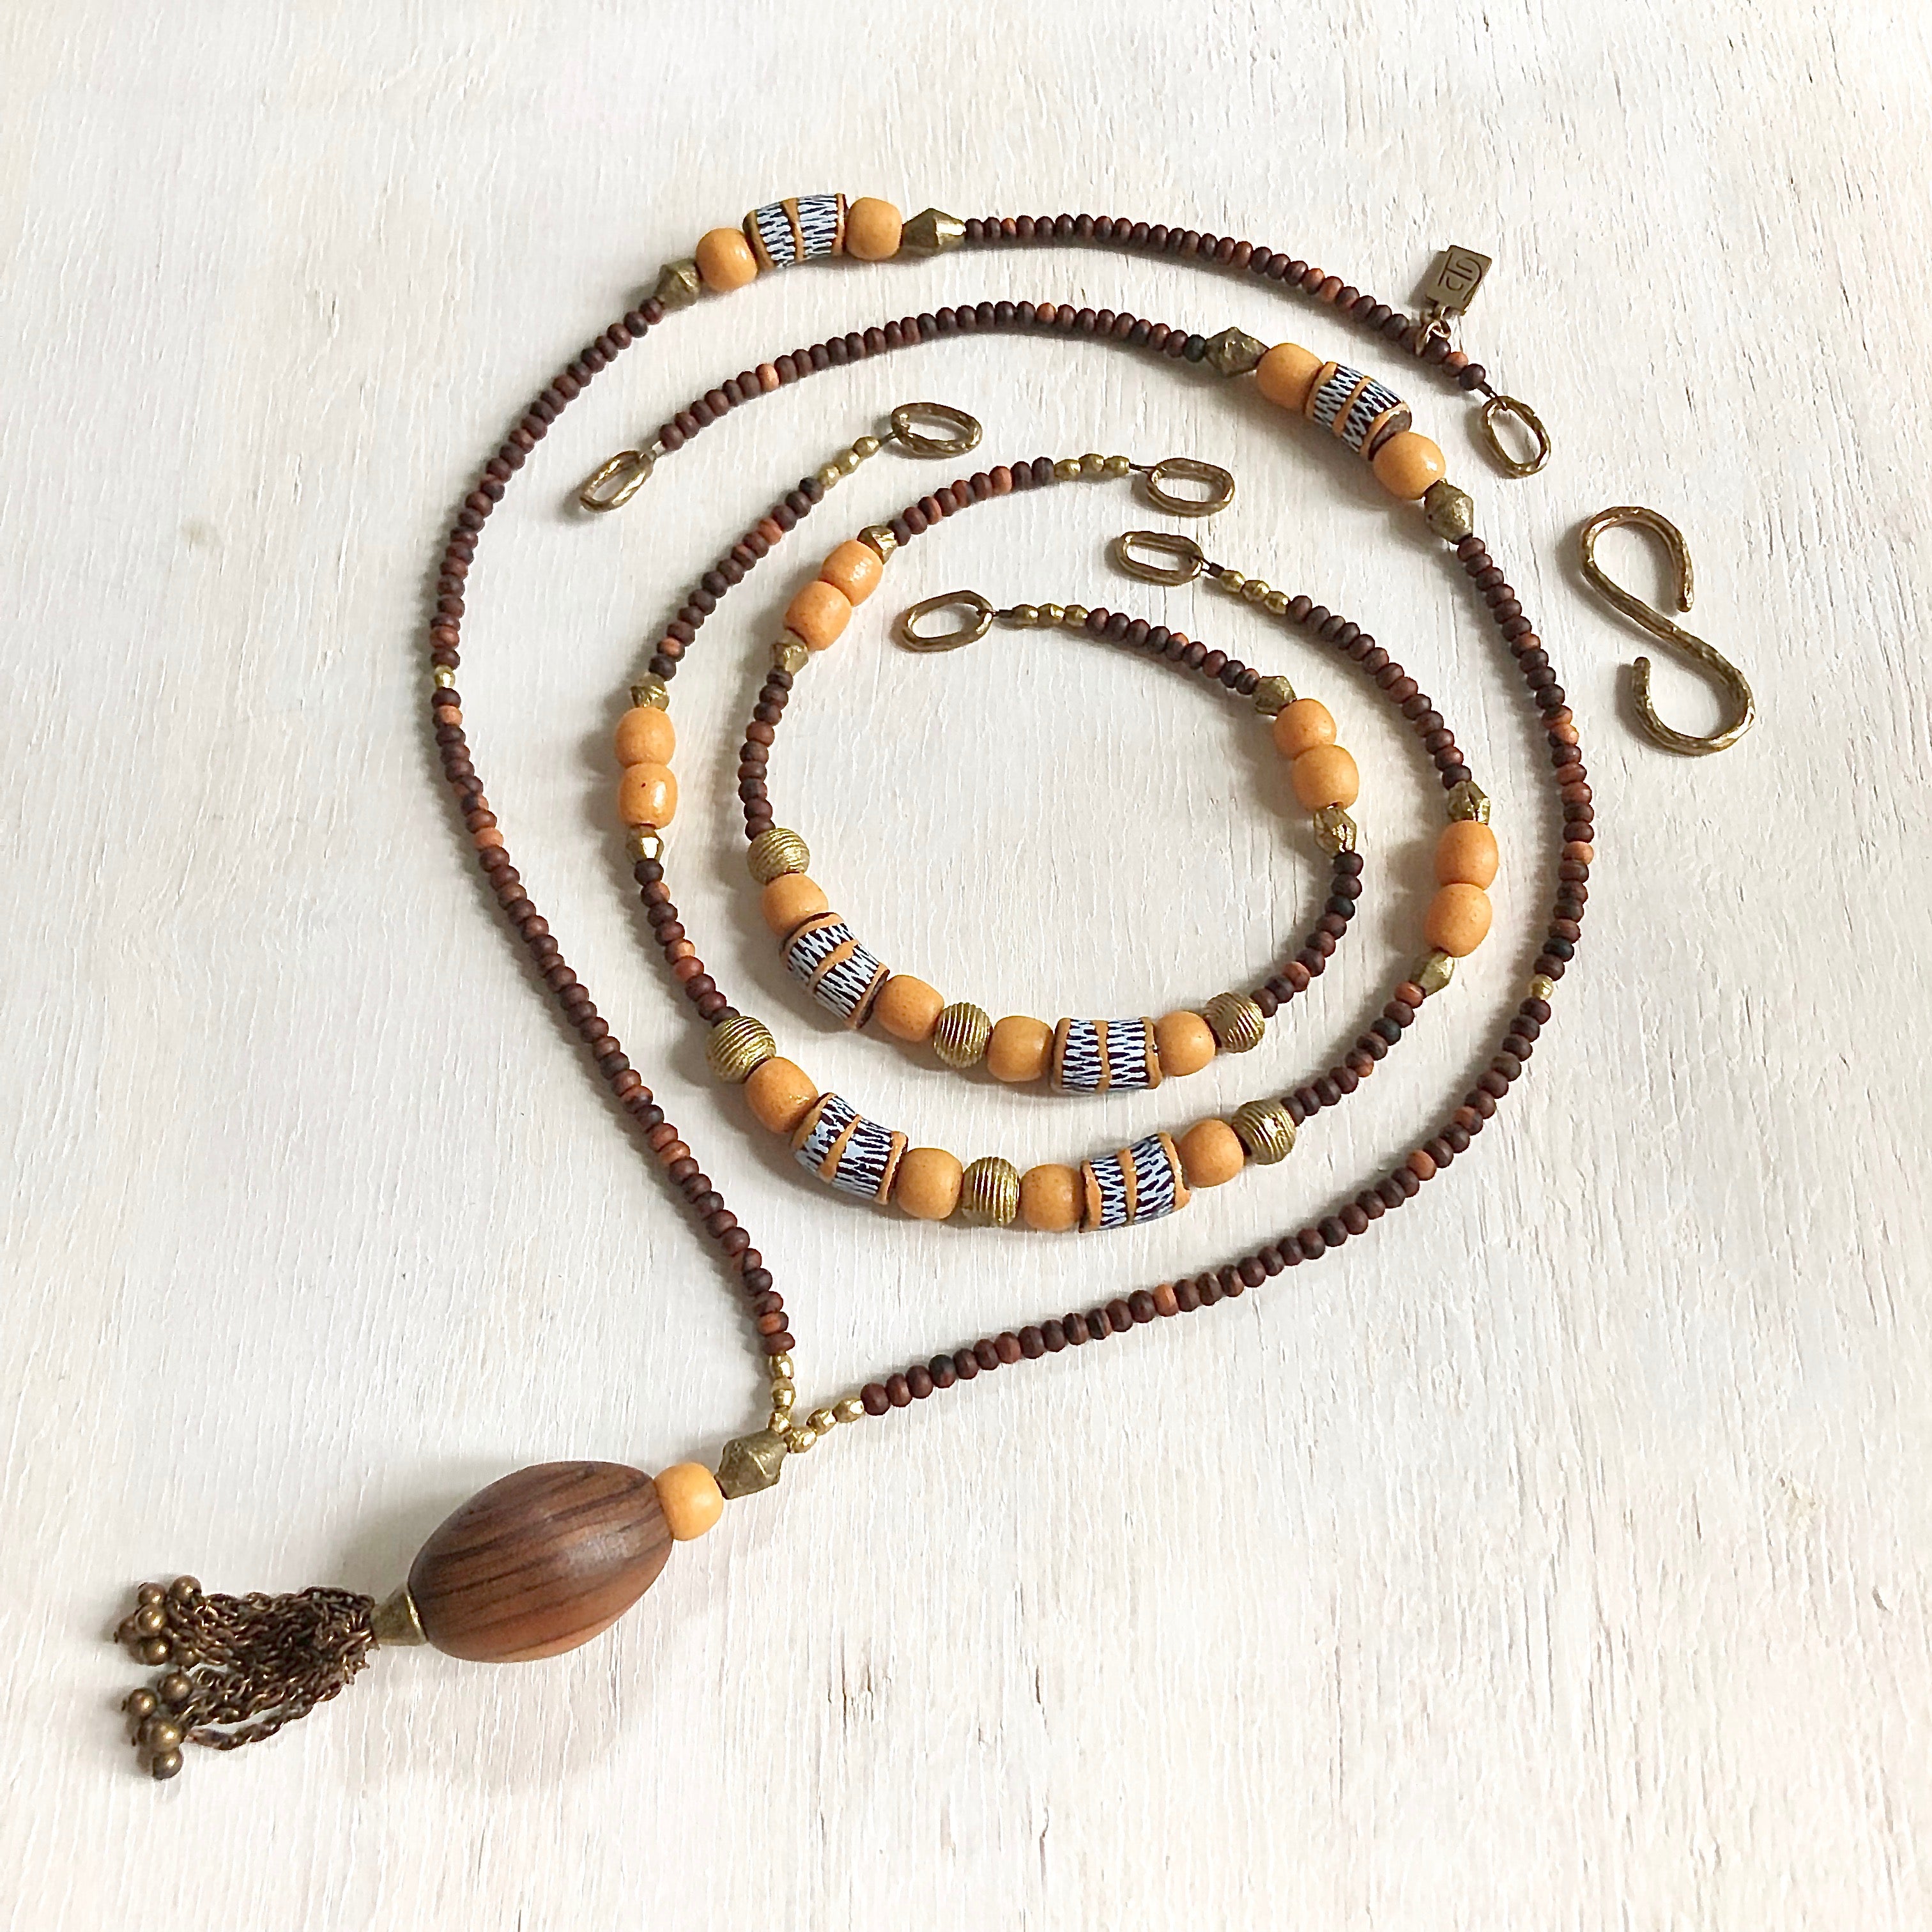 braids wooden beads #beads #woodenbeads #aliciakeys #cleopatrabraids  #braidedjewelry